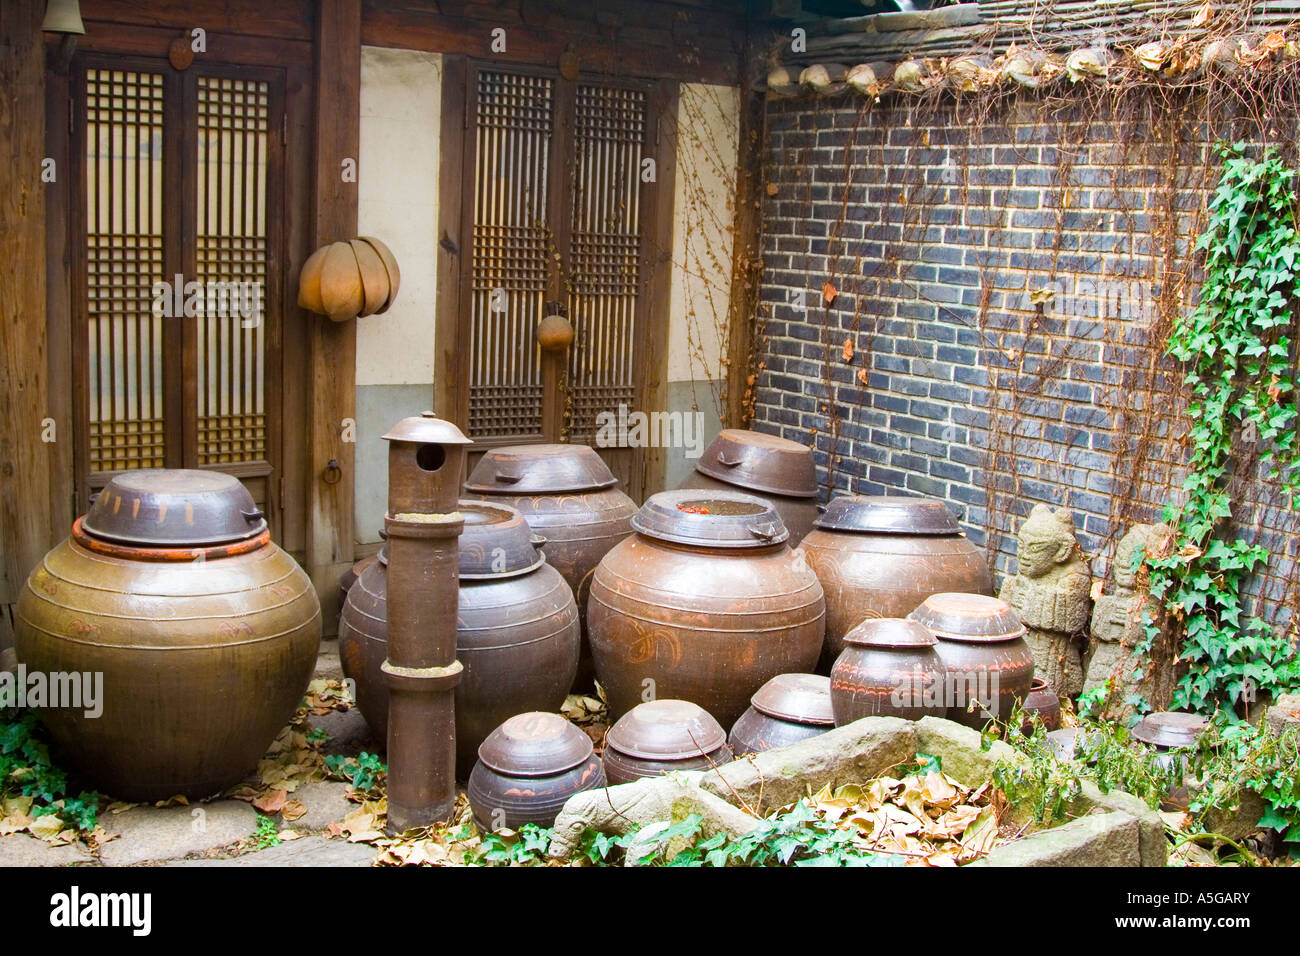 Large Traditional Clay Pottery Courtyard Garden Insadong Seoul Korea Stock Photo